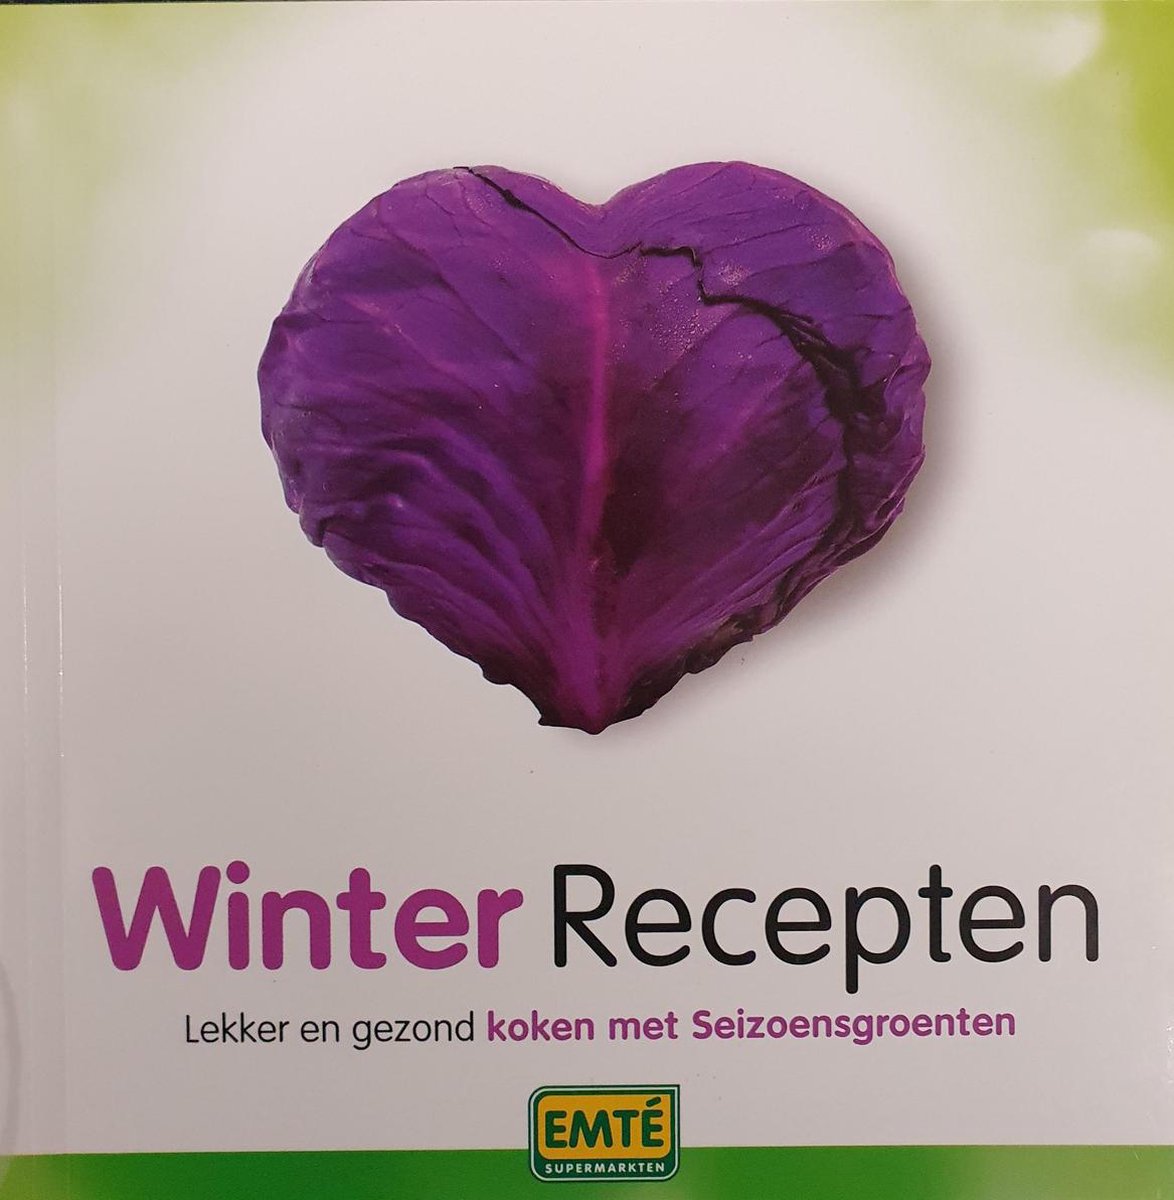 Winter recepten - Emte